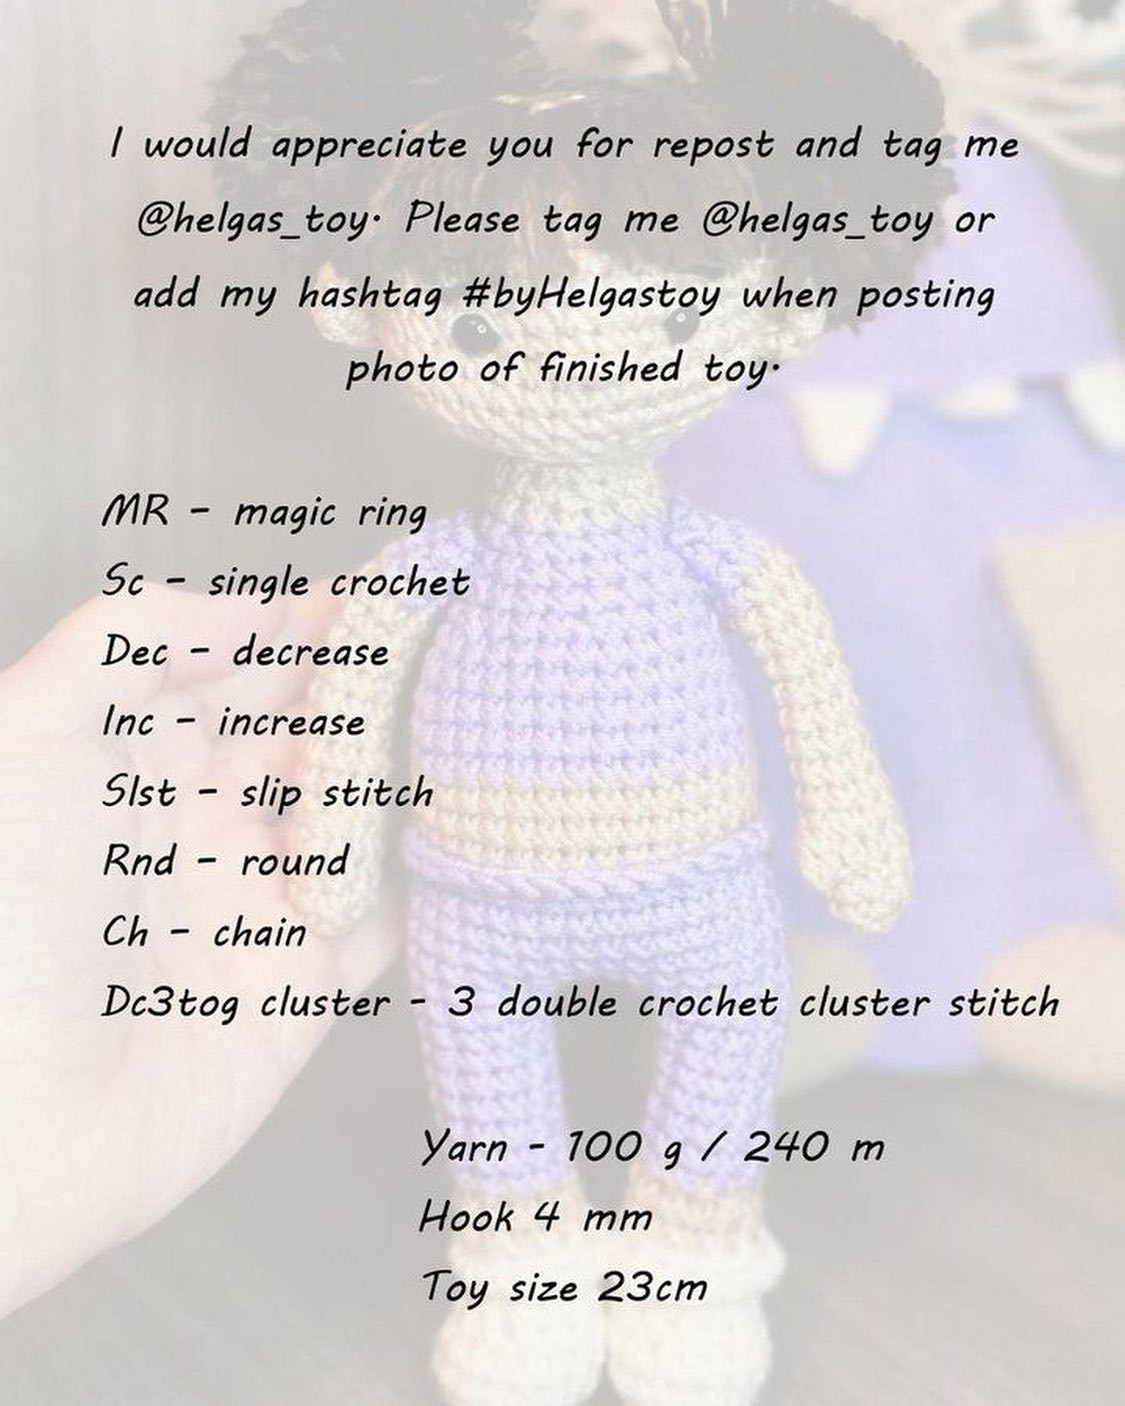 Black hair doll crochet pattern wearing purple shirt and pants